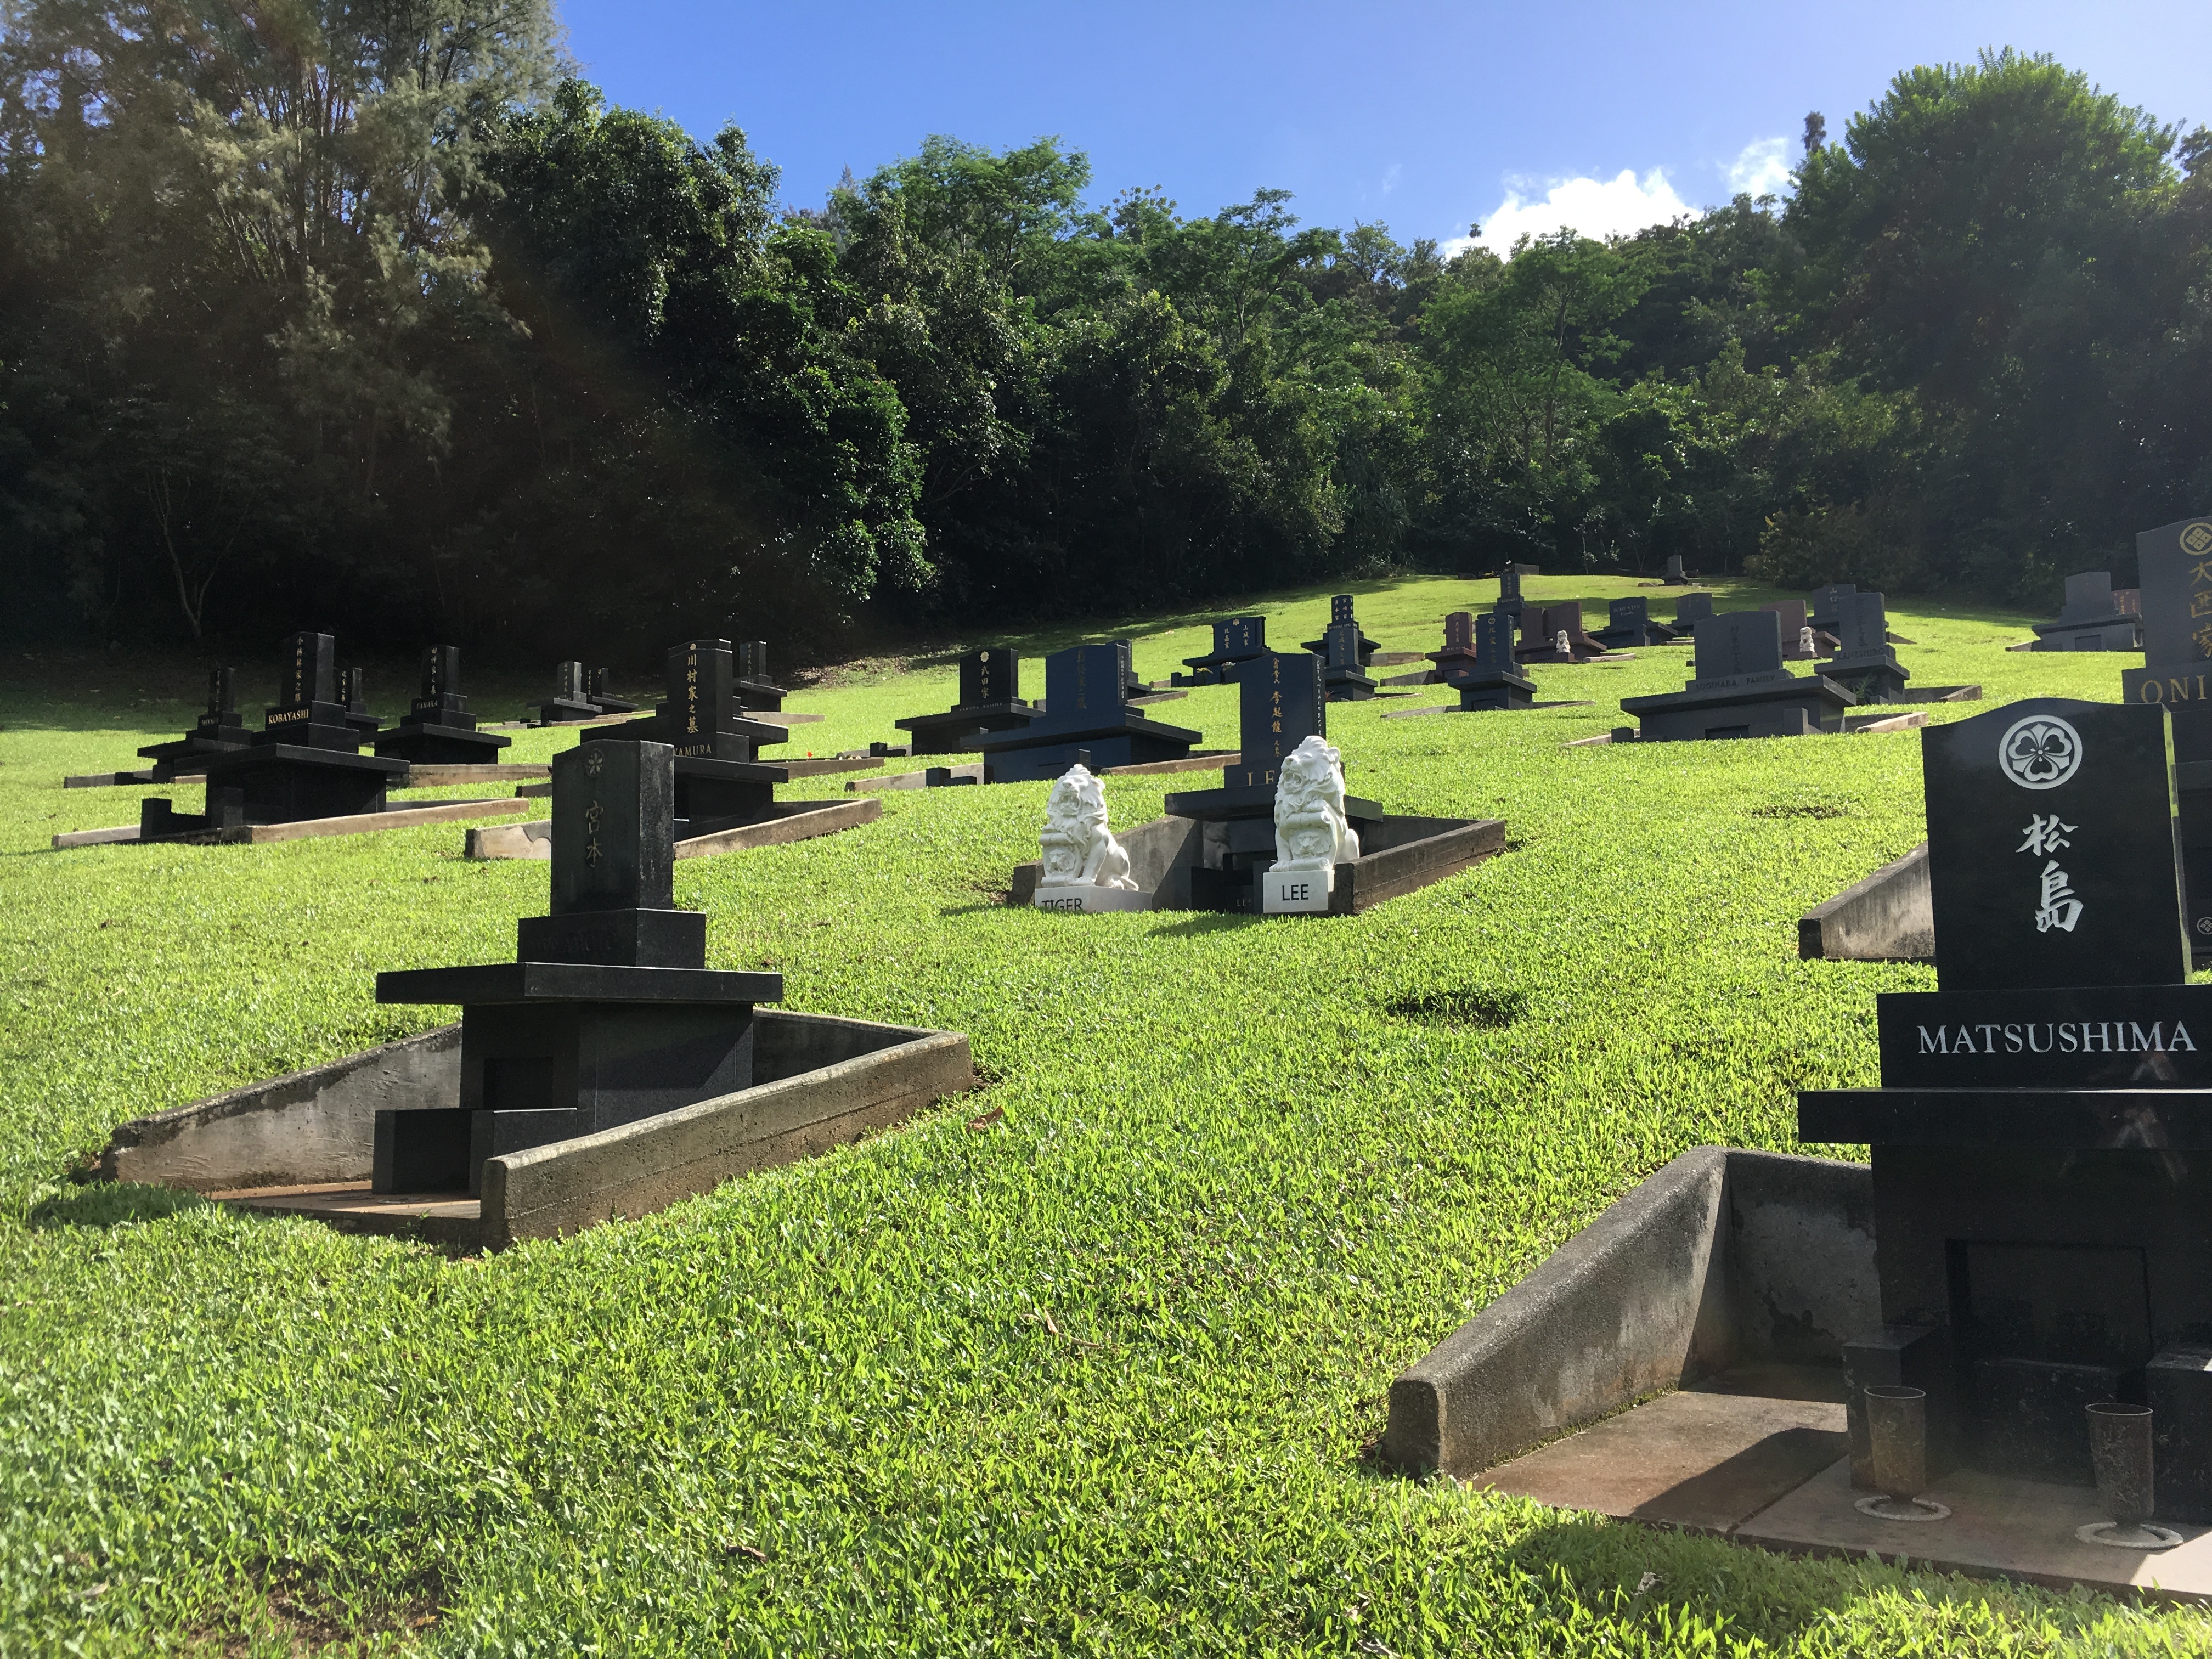 Graveyard of the Byodo-in Temple in Oahu